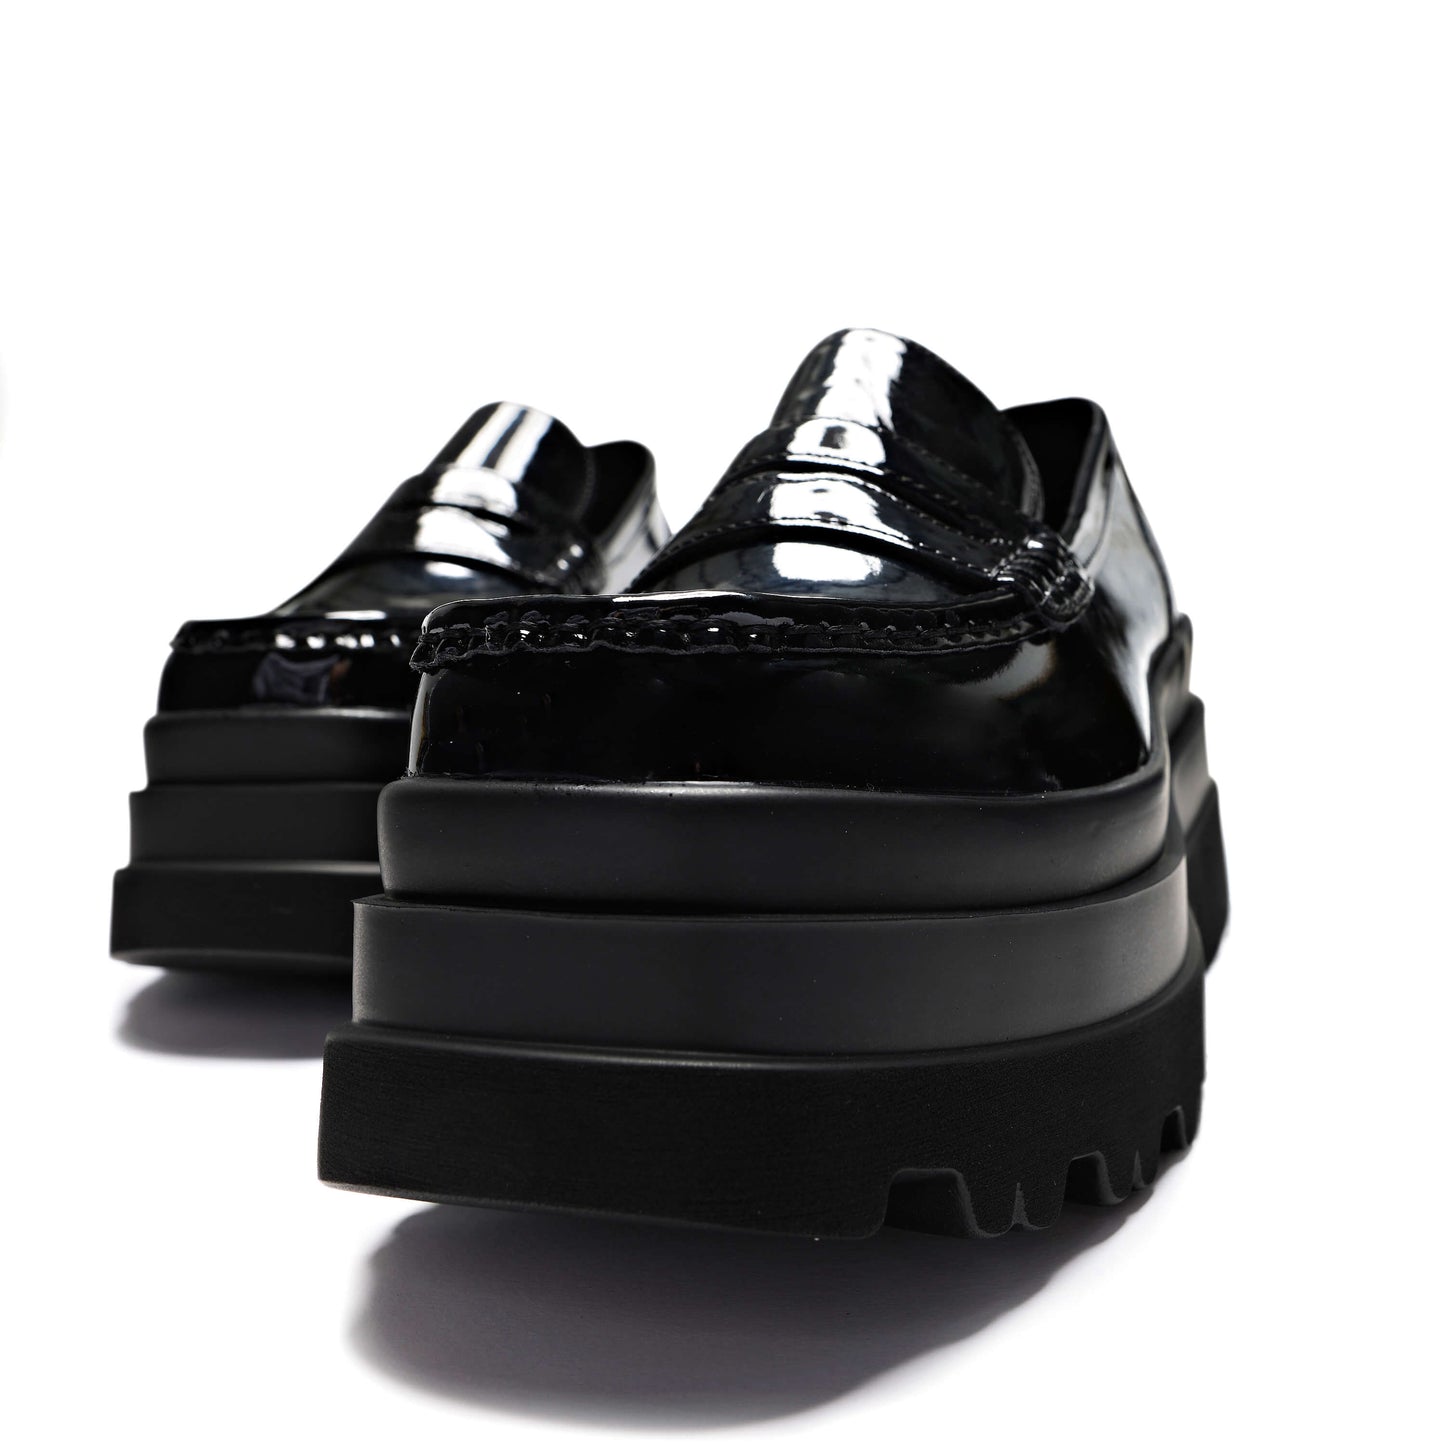 Arna Black Patent Trident Shoes - Shoes - KOI Footwear - Black - Front Detail